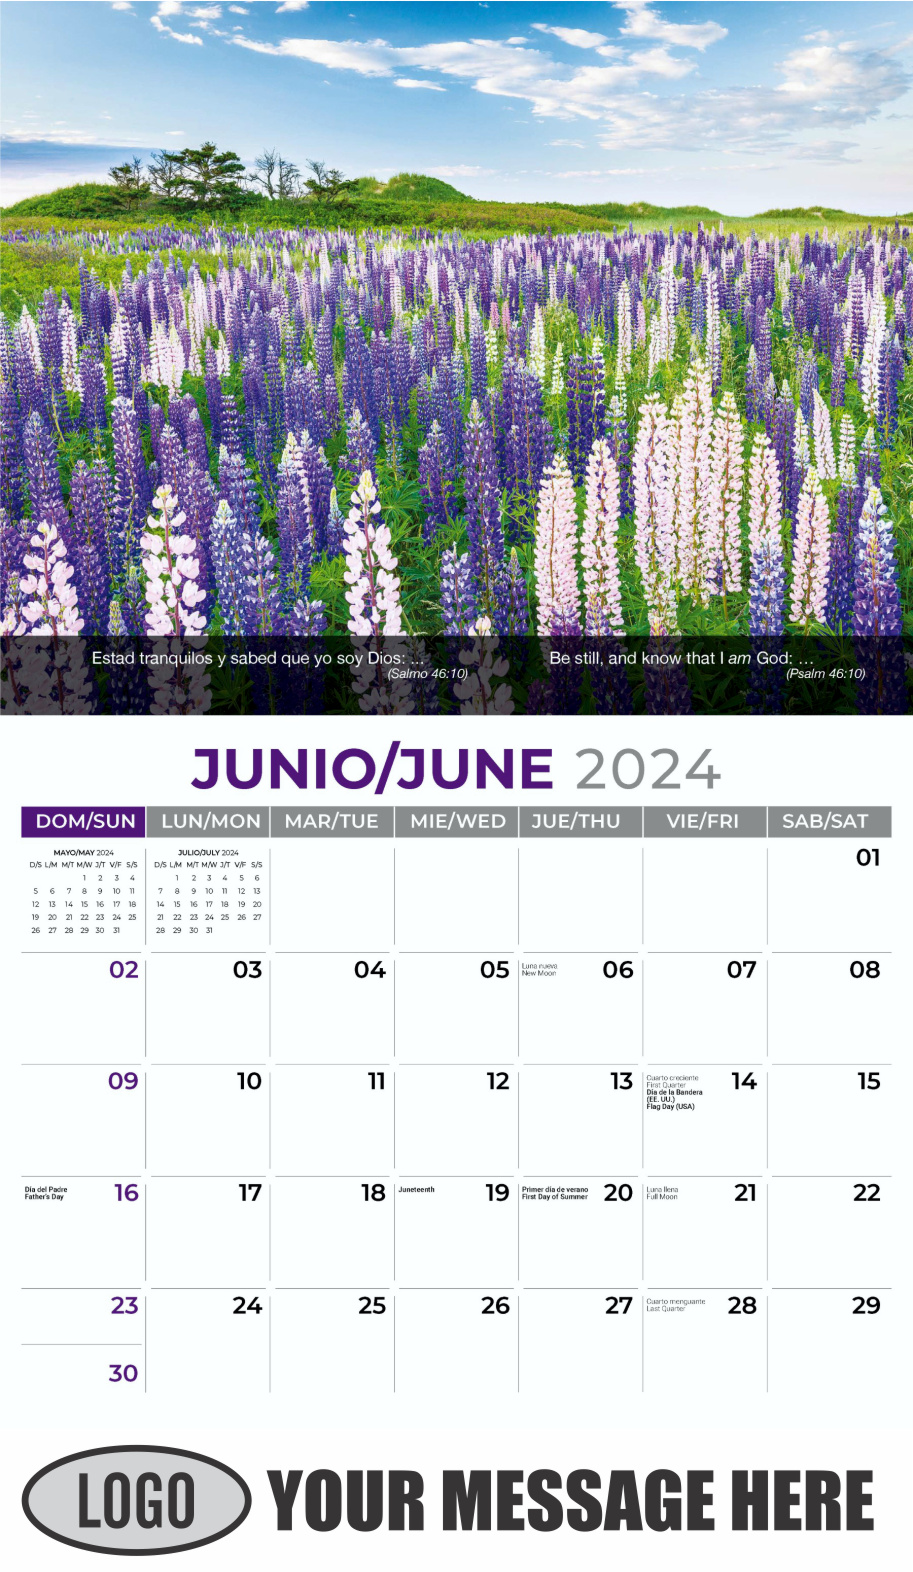 Faith Passages 2024 Bilingual Christian Faith Business Promotional Calendar - June